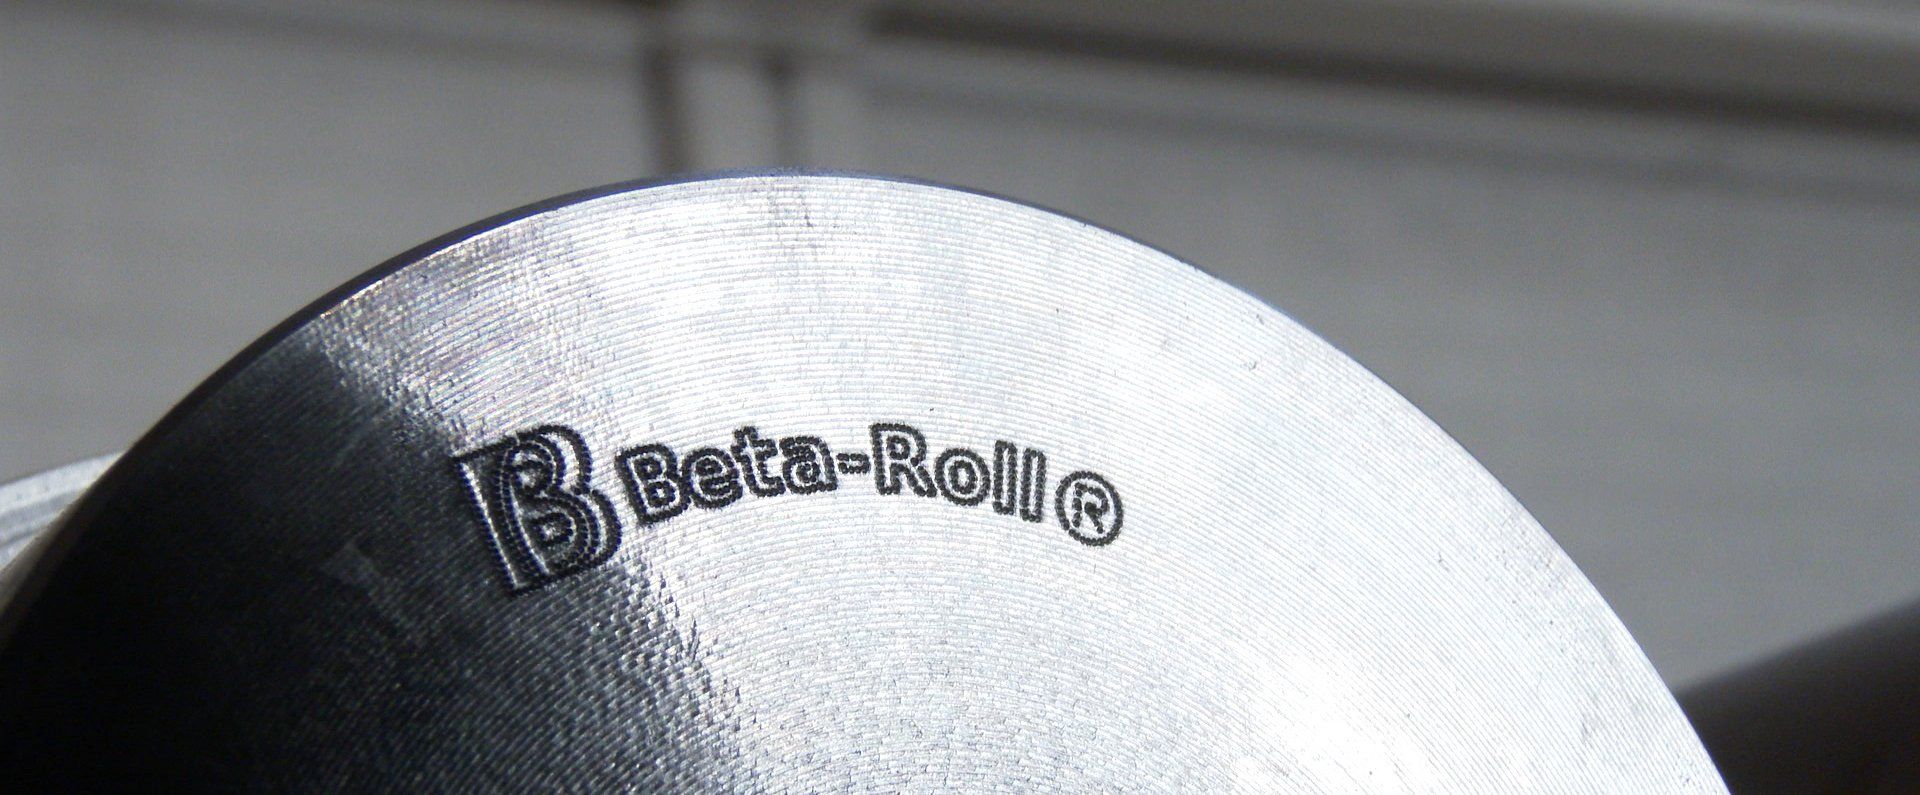 Beta-Roll marking